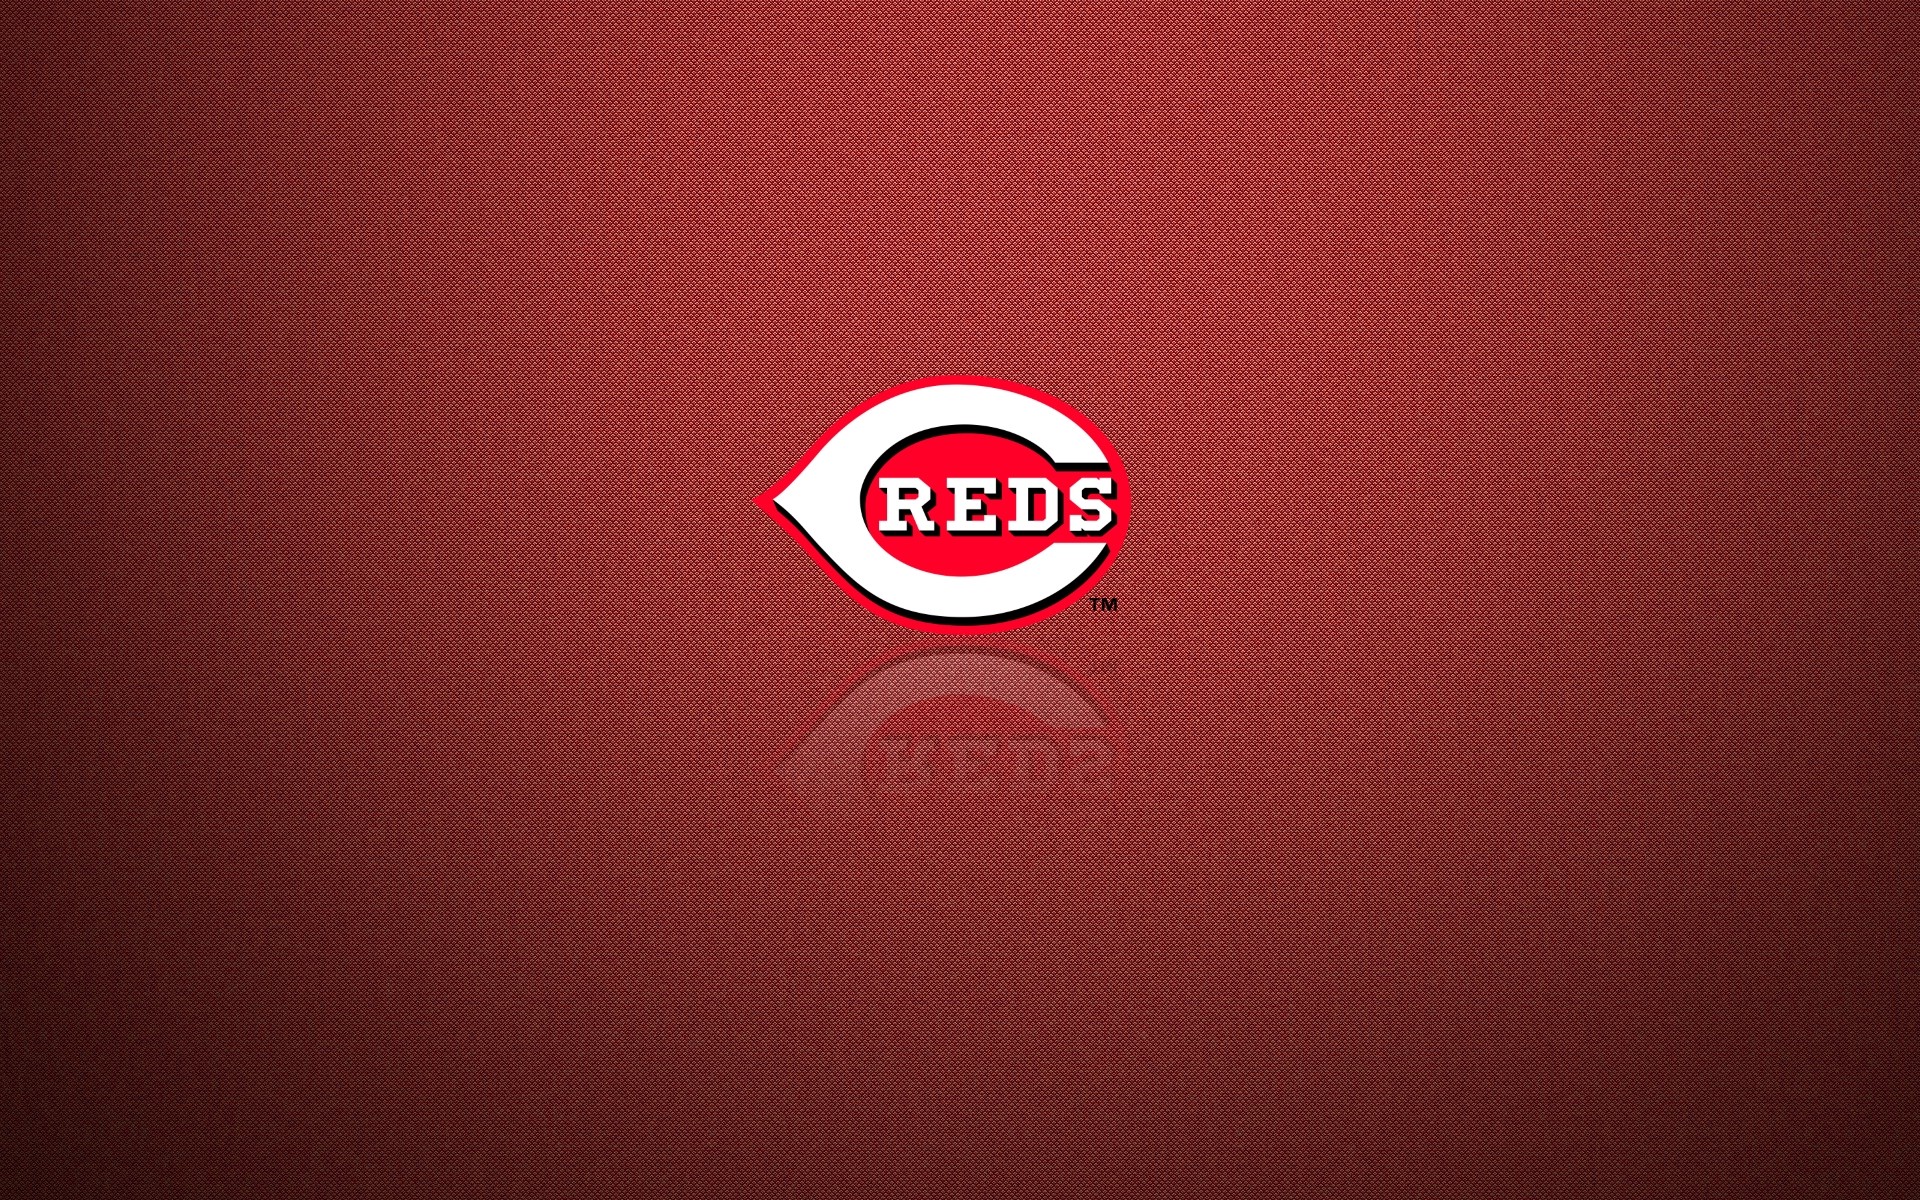 HD Cincinnati Reds Image Cool Background Photos 1080p Windows